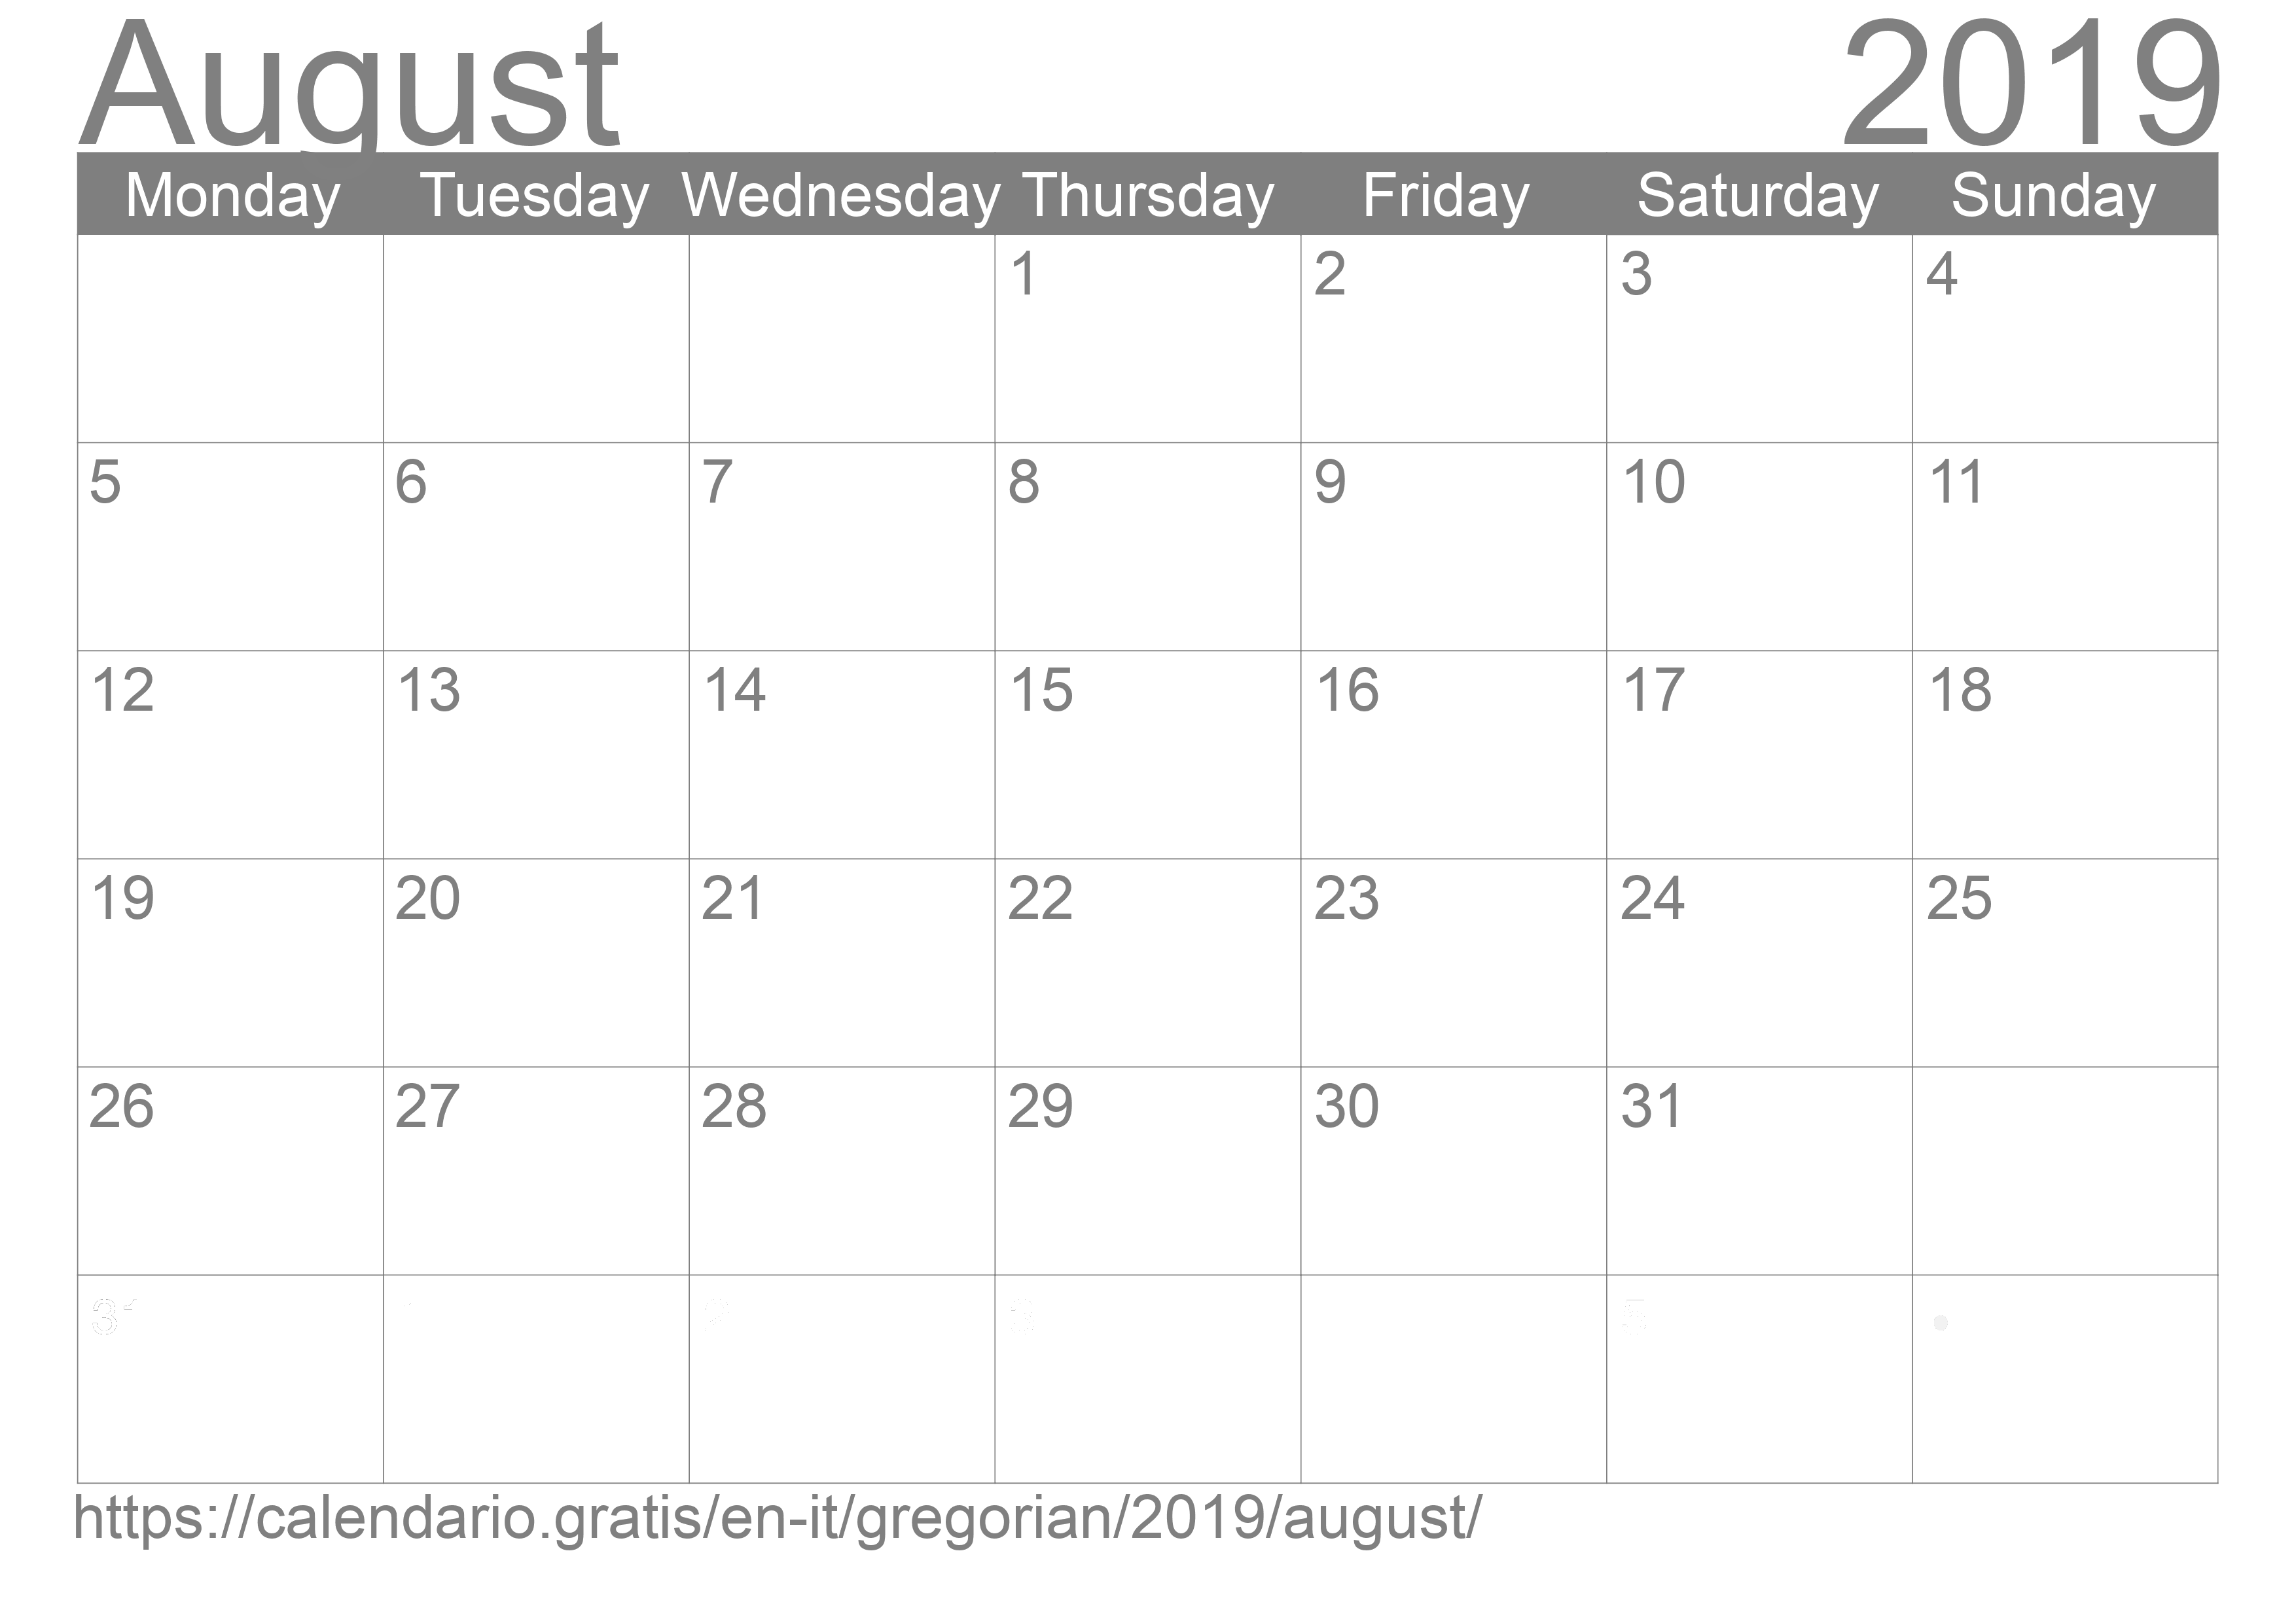 Calendar August 2019 to print